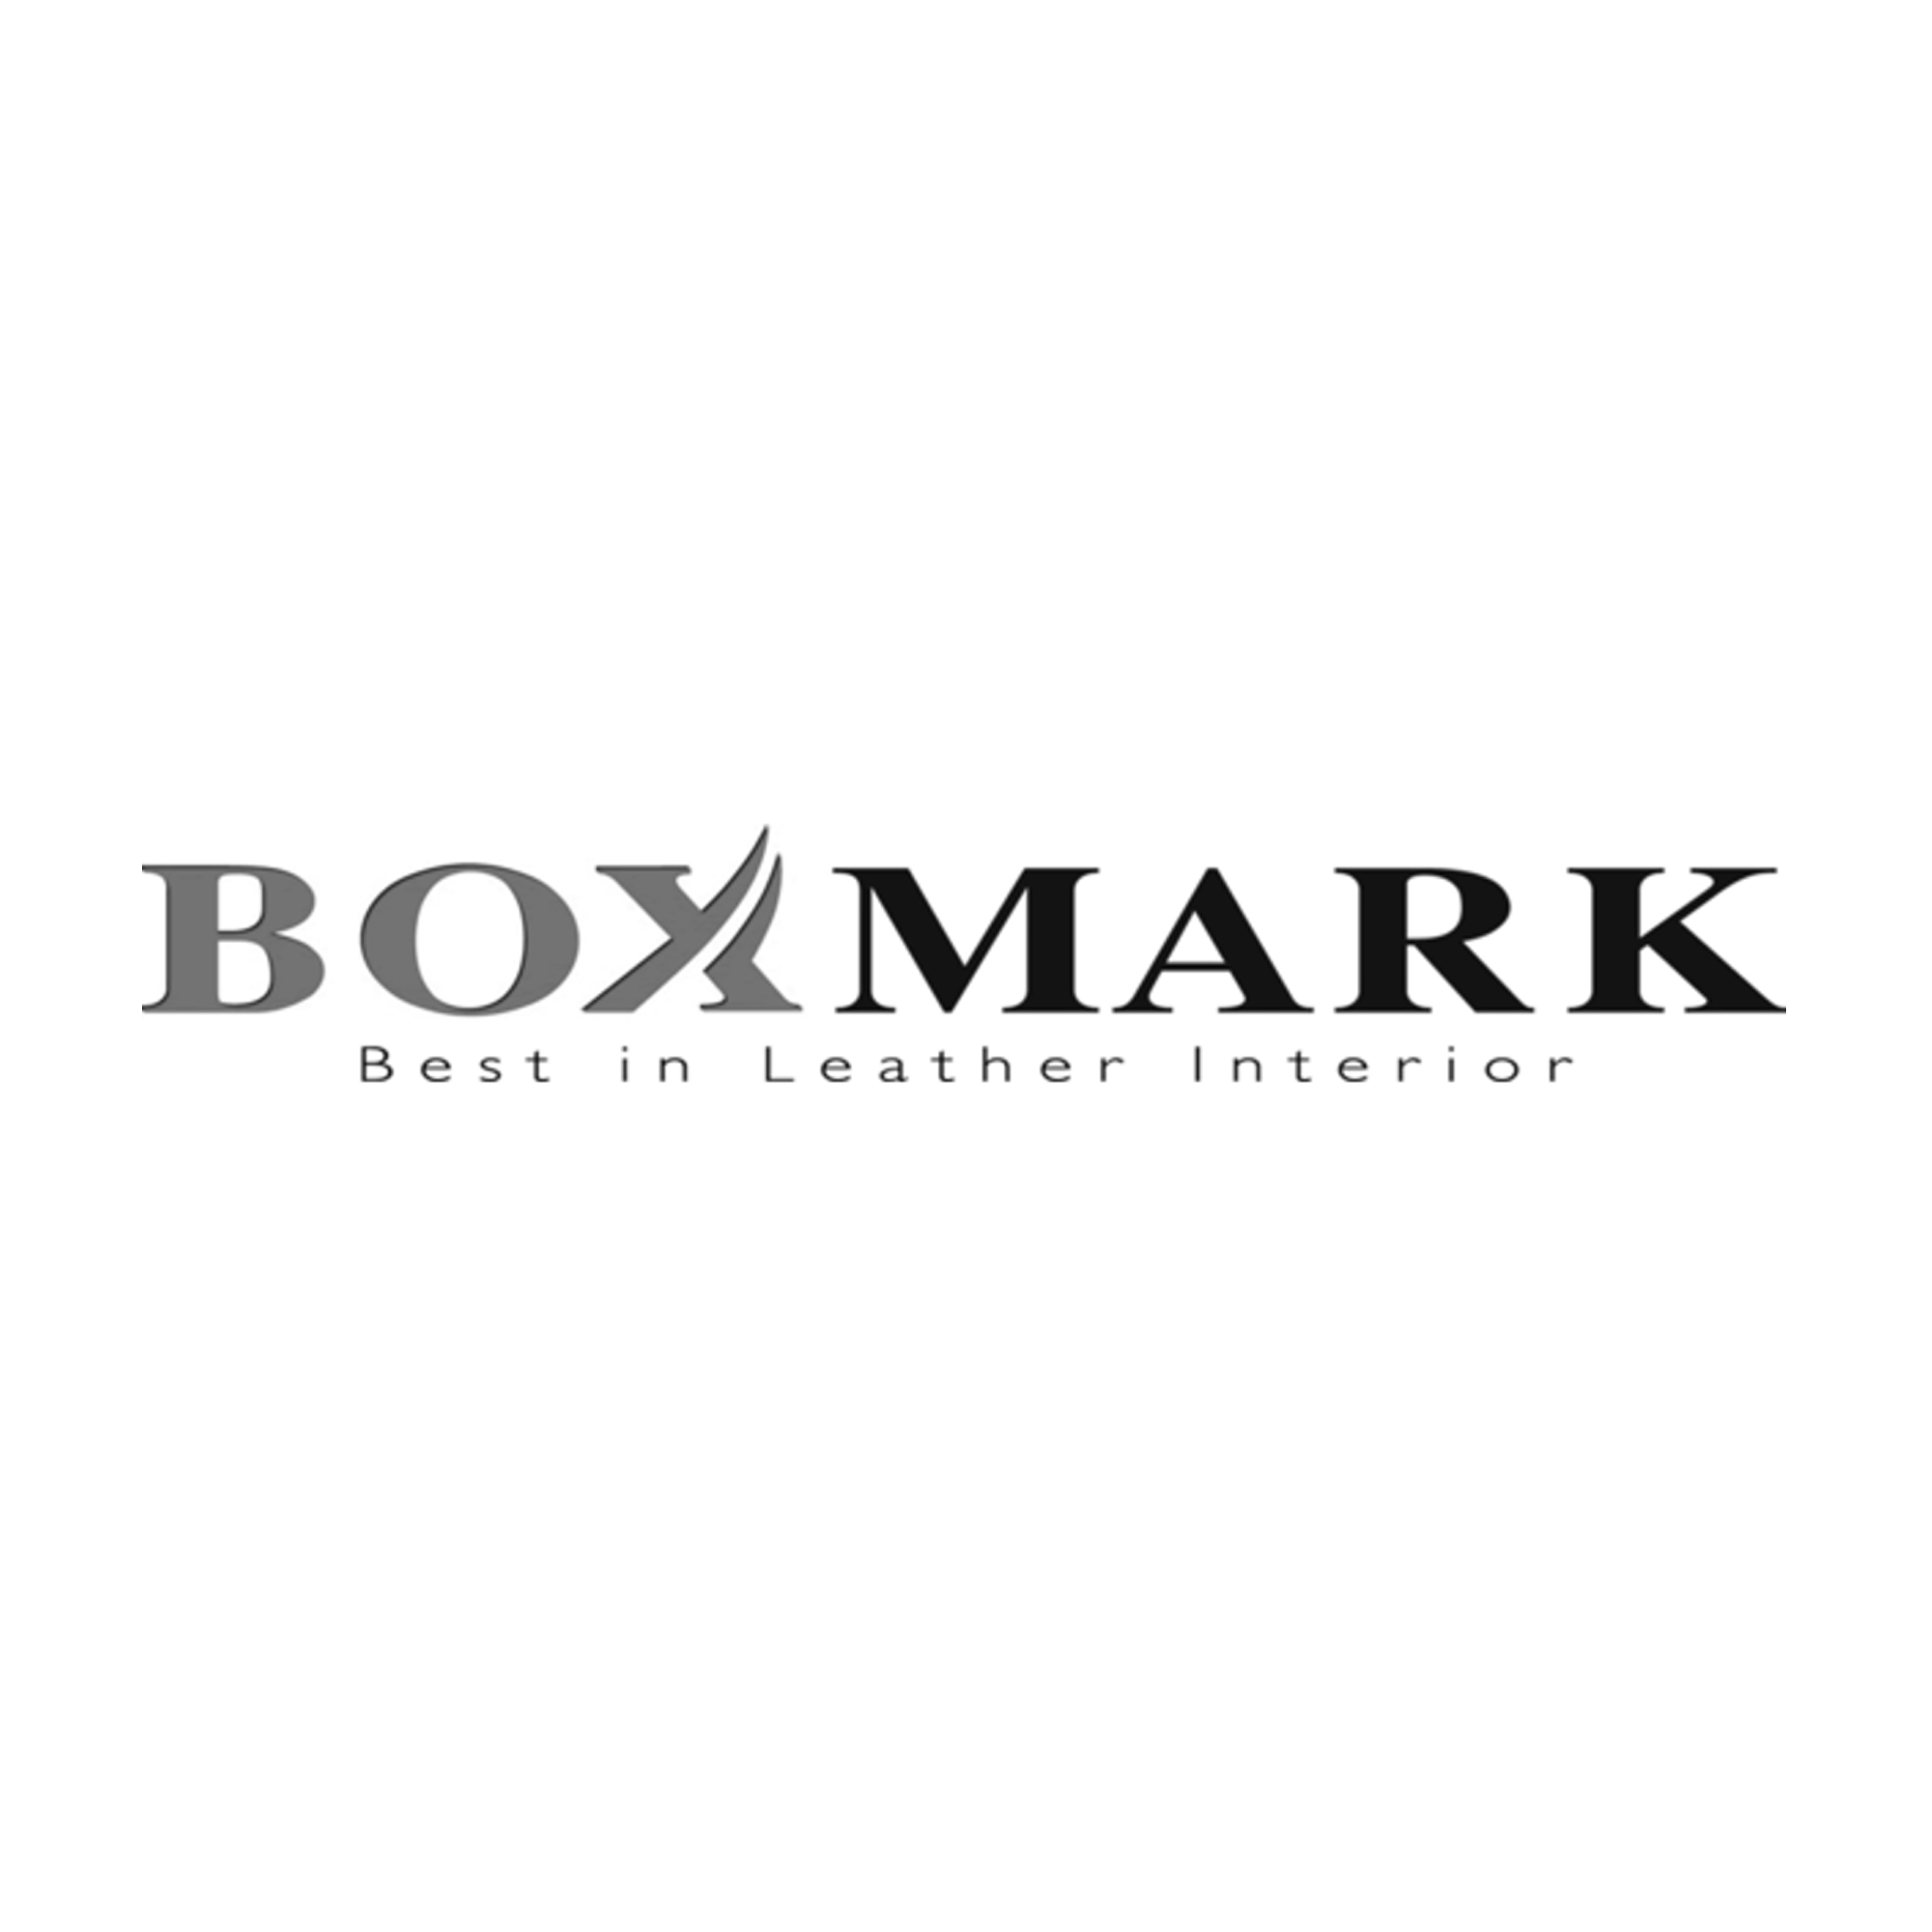 www.boxmark.at